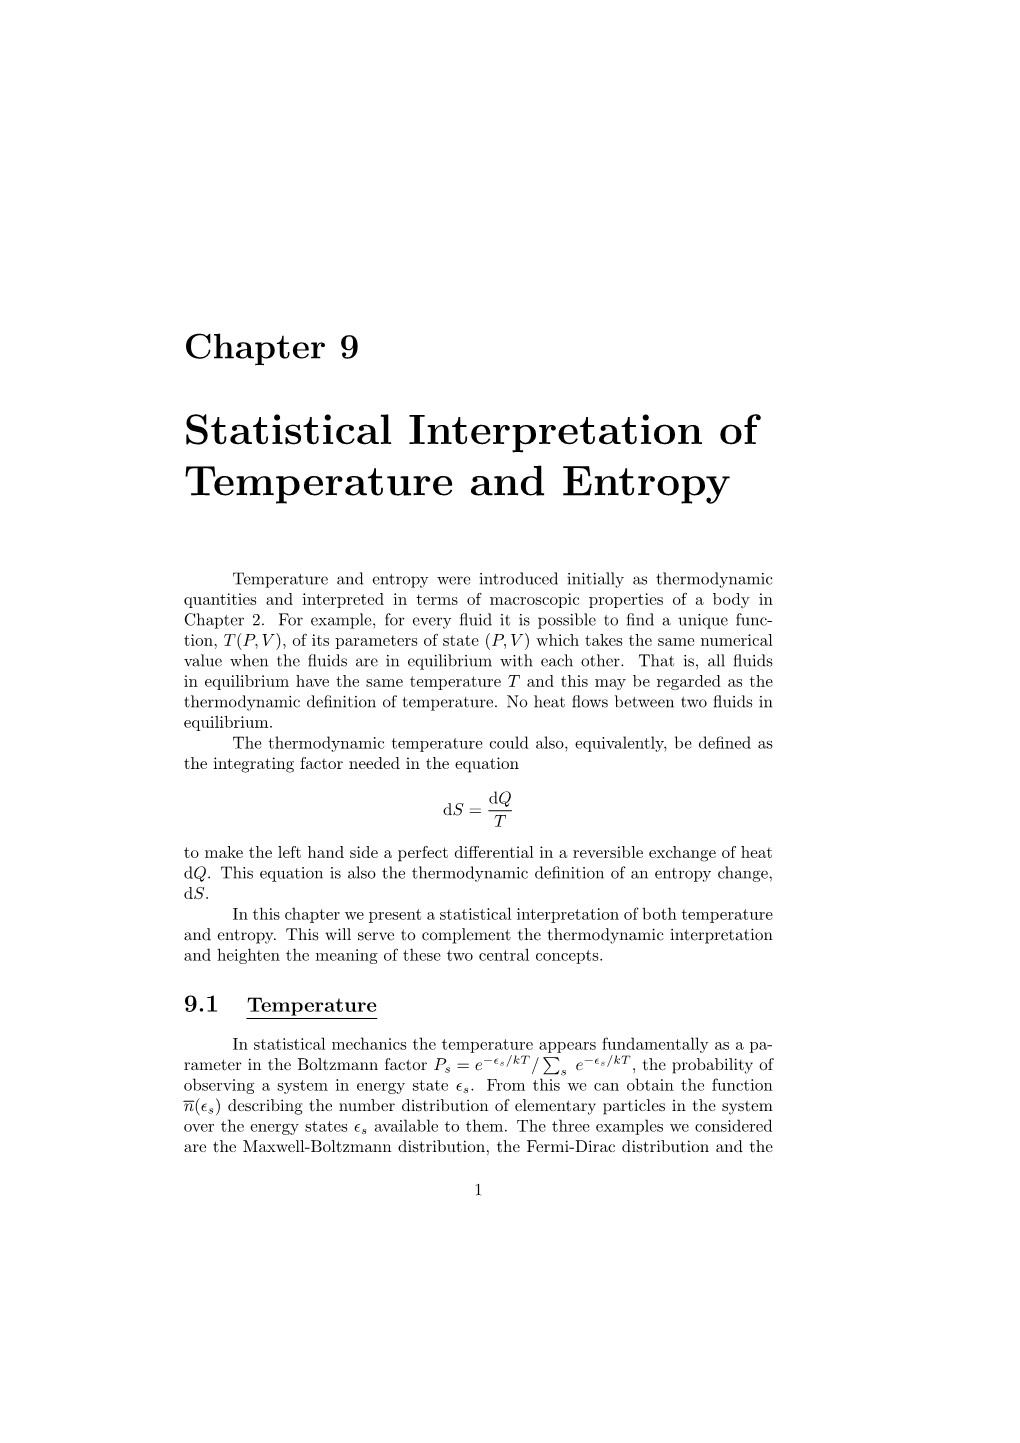 Statistical Interpretation of Temperature and Entropy